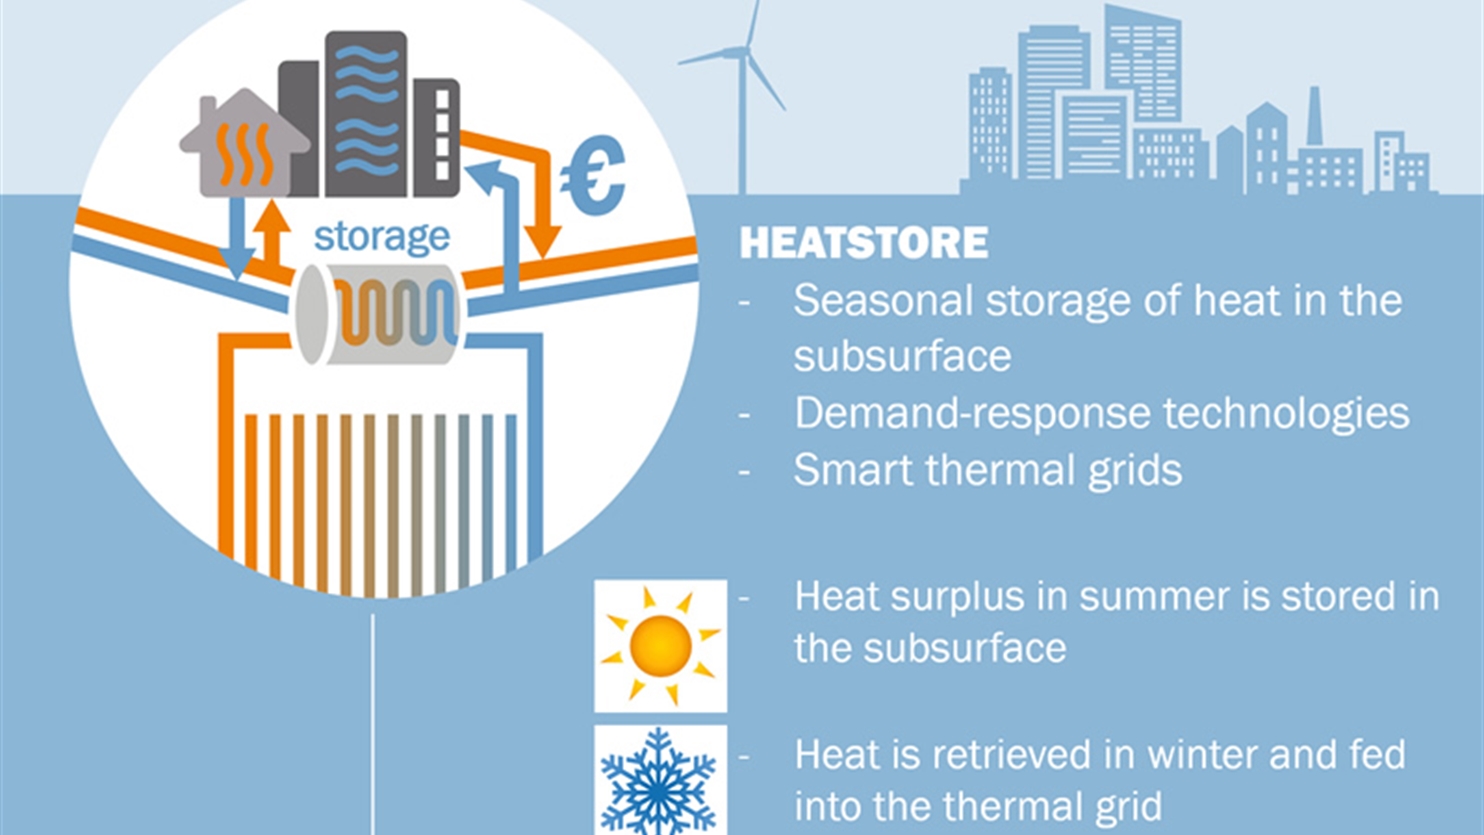 Explanation of the working of Heatstore